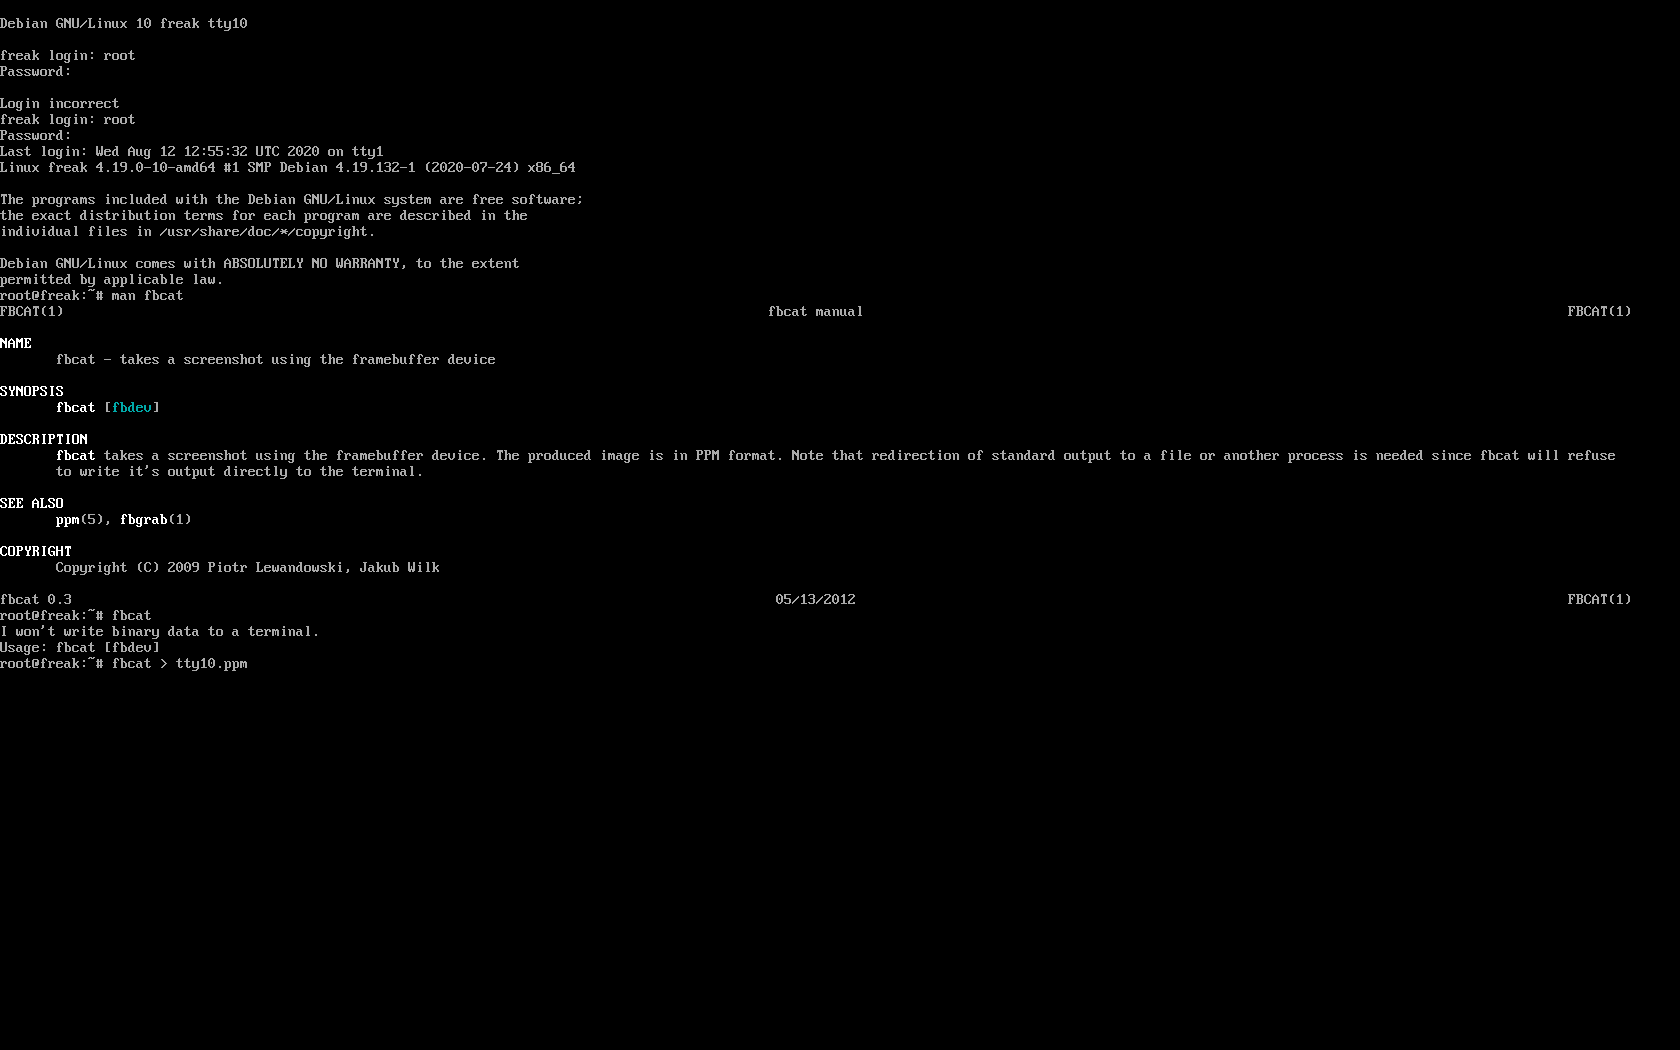 tty10-linux-screenshot-fbcat-how-to-screenshot-console